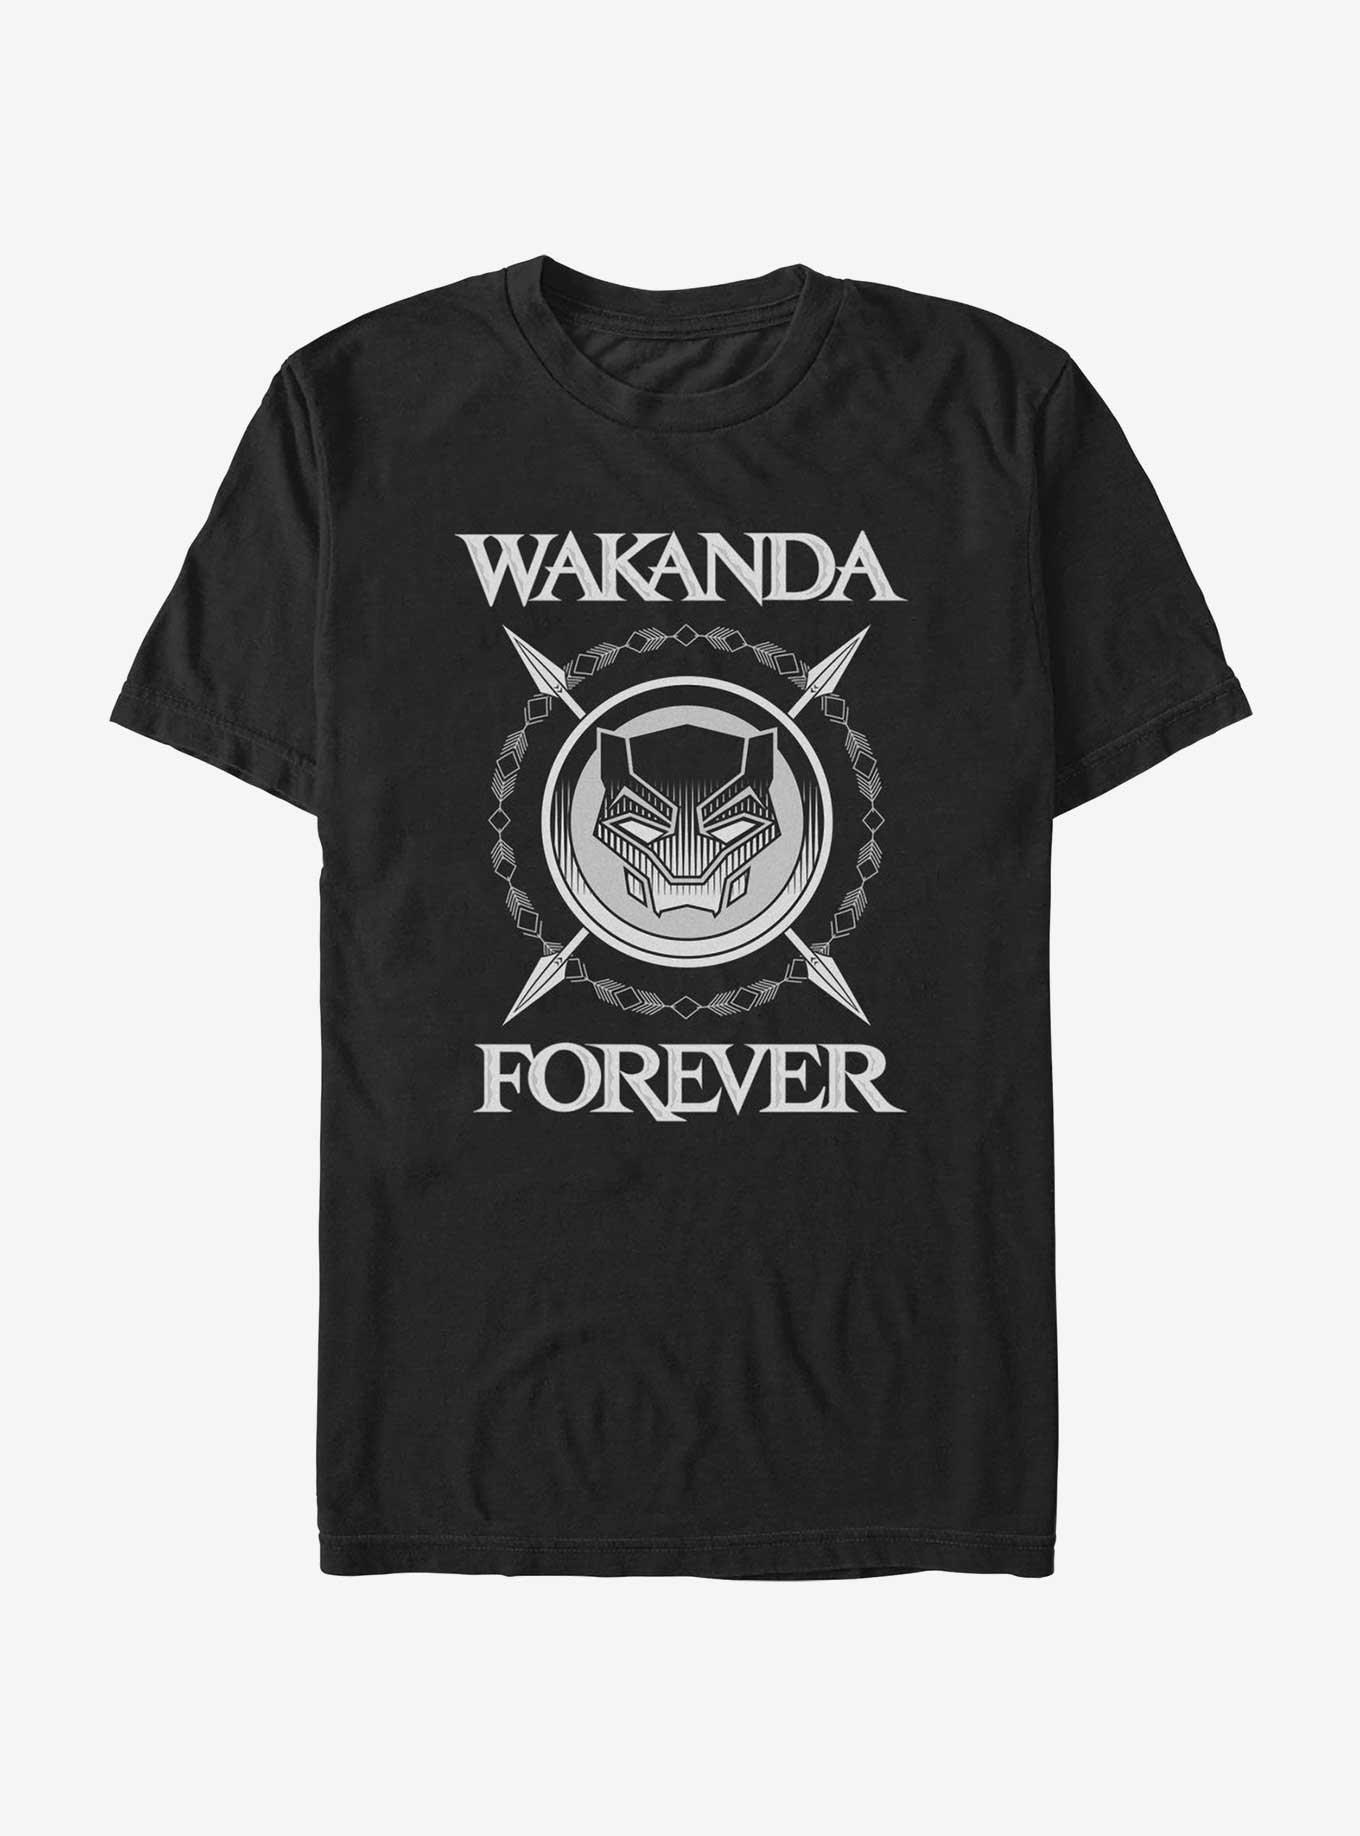 Marvel Black Panther: Wakanda Forever Crossed Spears Emblem Extra Soft T-Shirt